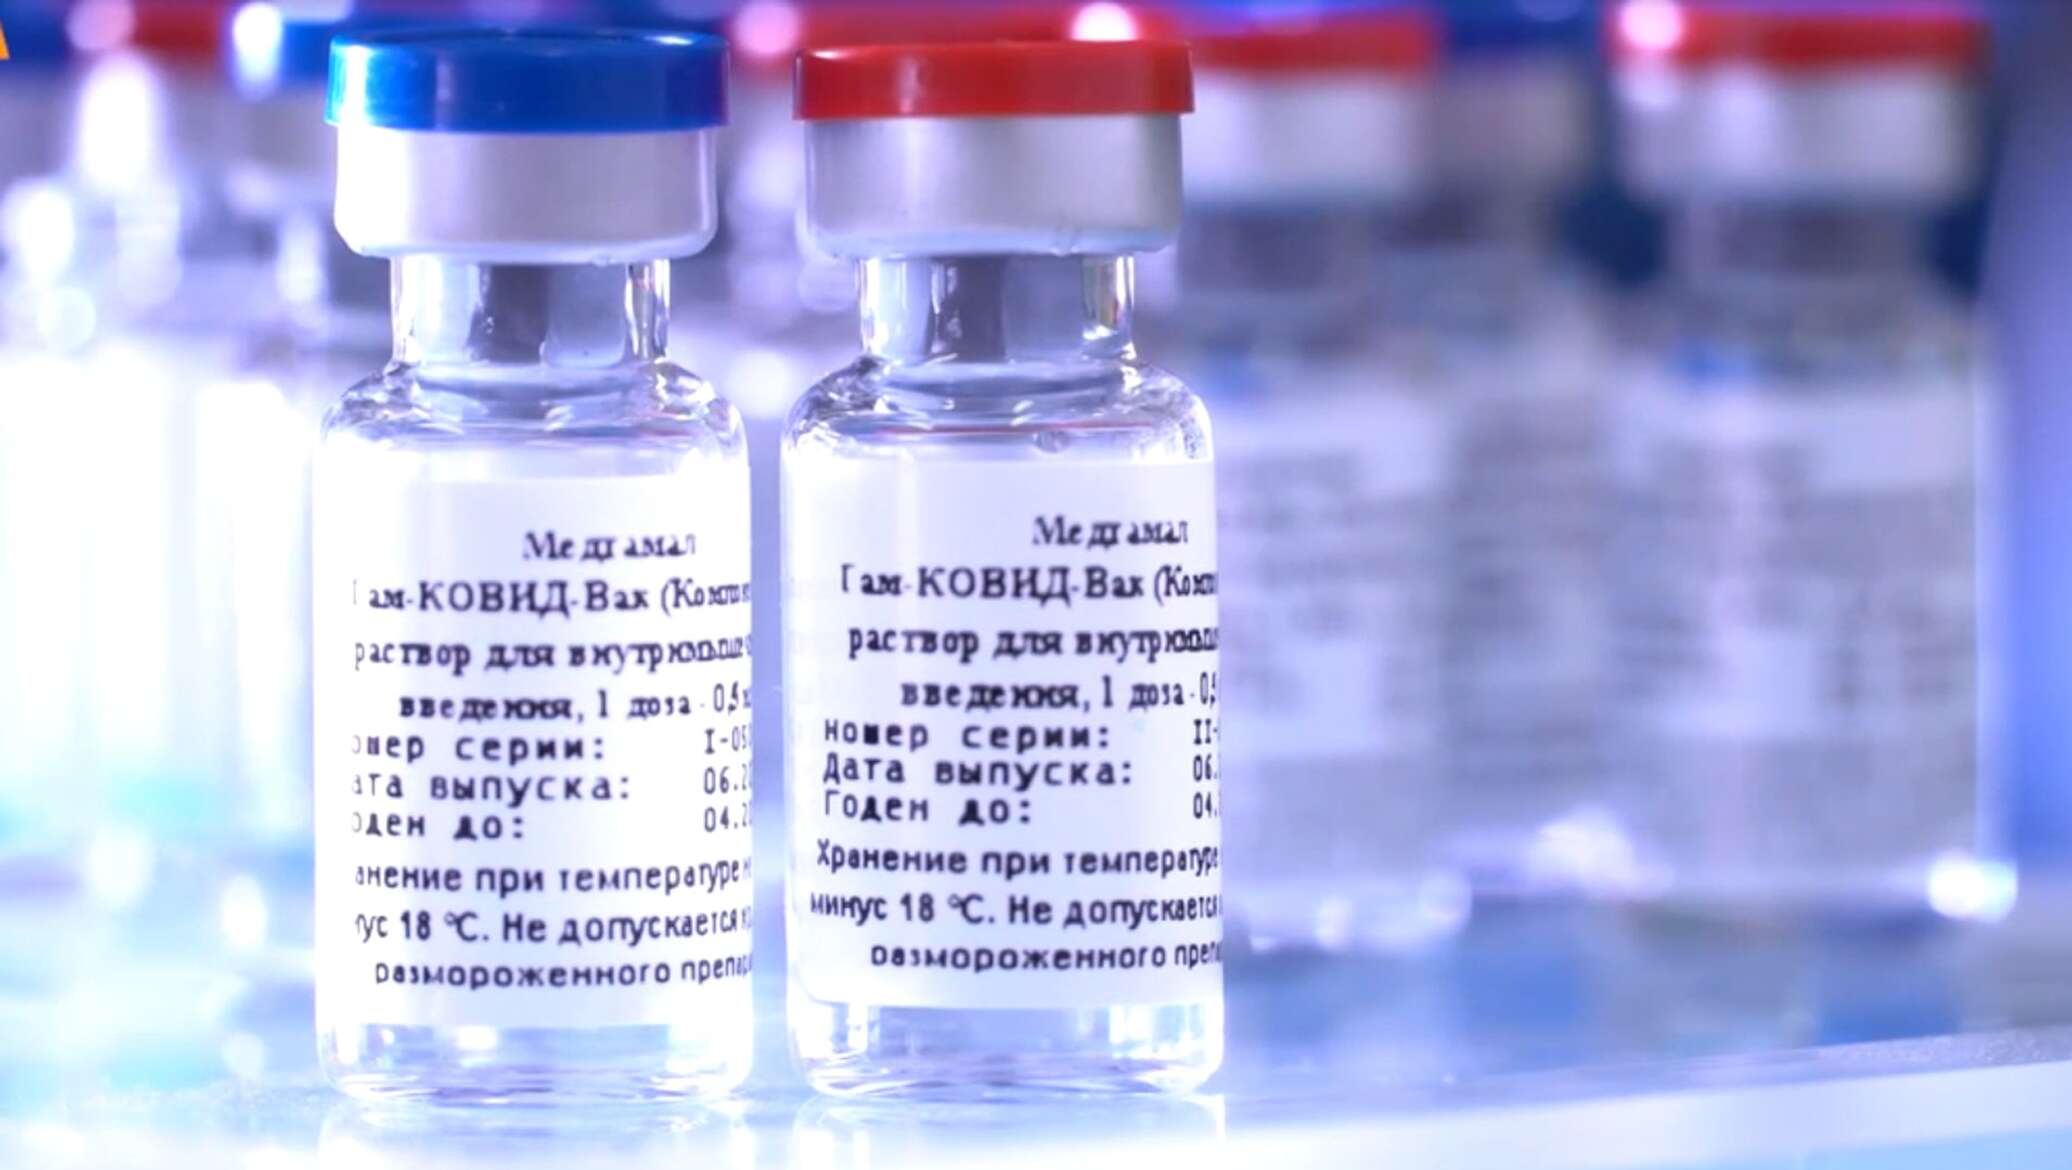 Выпуск вакцины. Вакцина. Вакцина от коронавируса. Спутник вакцина от коронавируса. Производители вакцины от коронавируса в России.